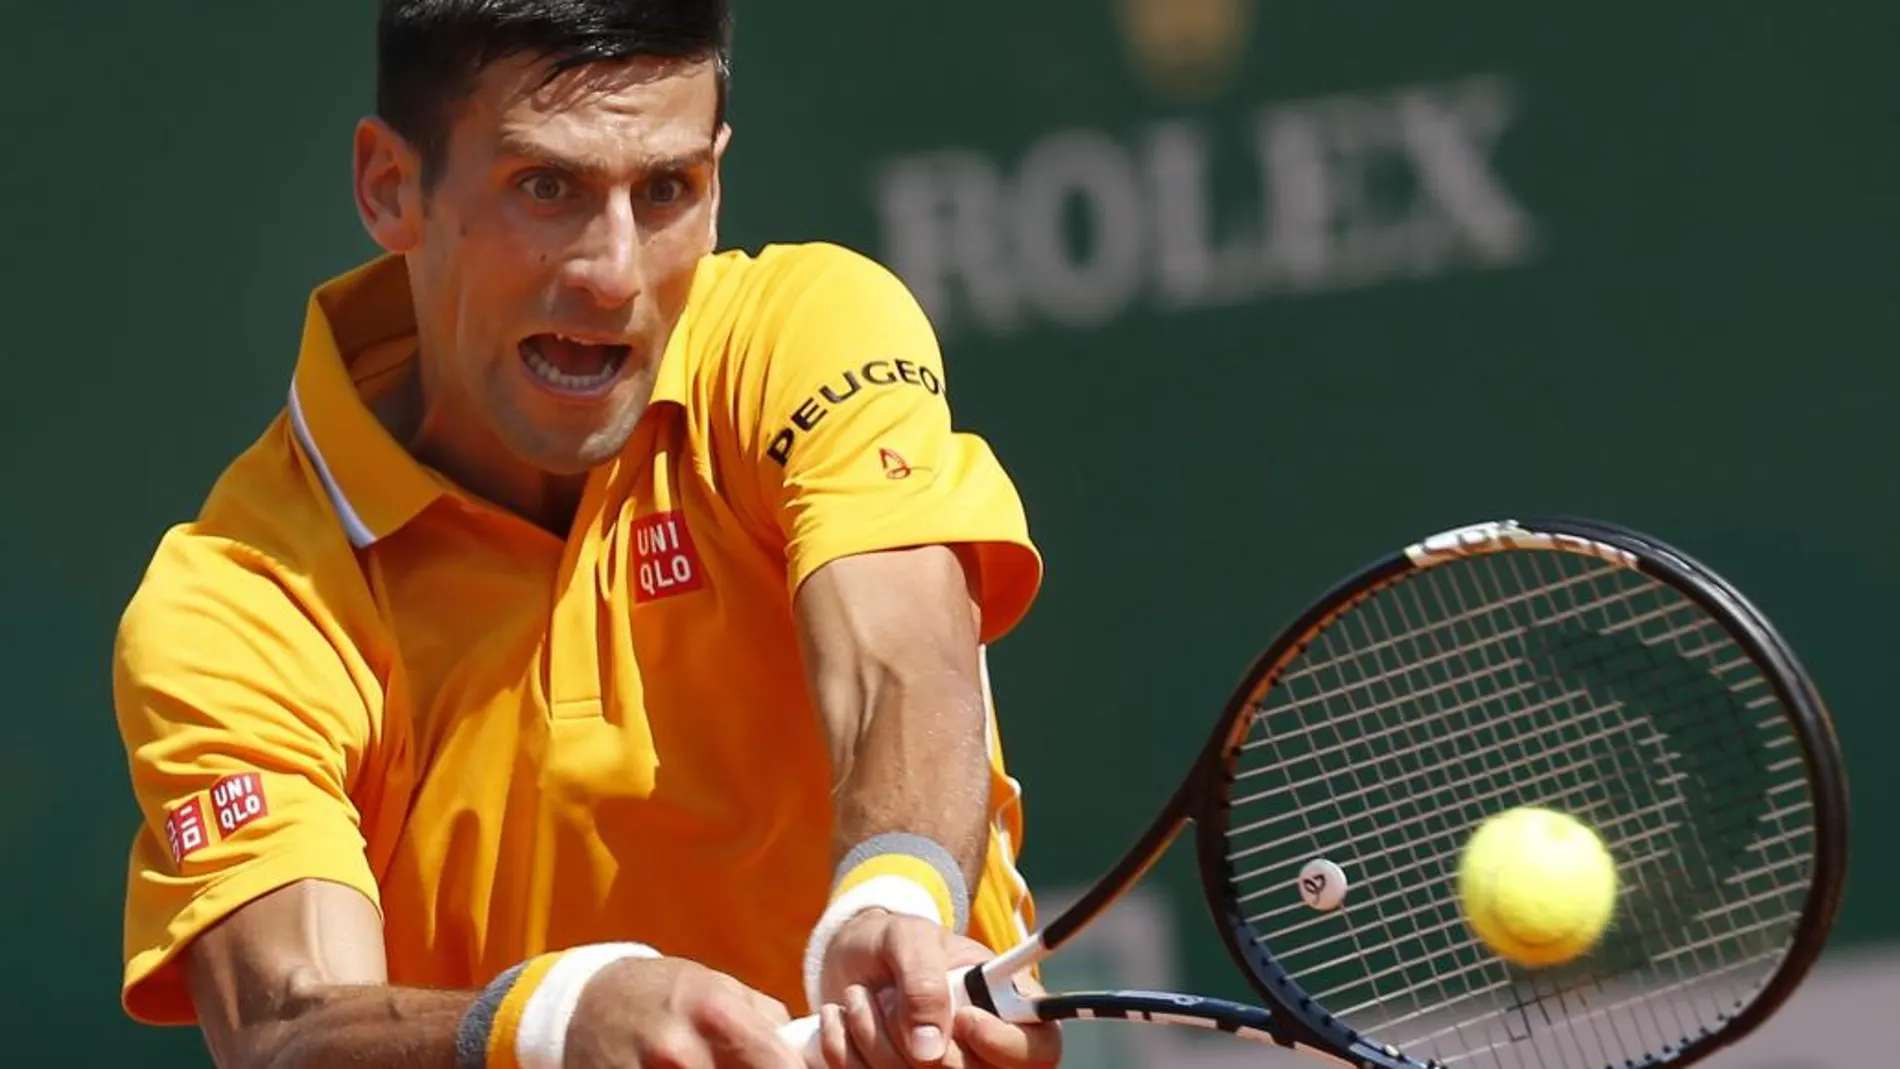 El tenista serbio Novak Djokovic devuelve una bola al español Albert Ramos